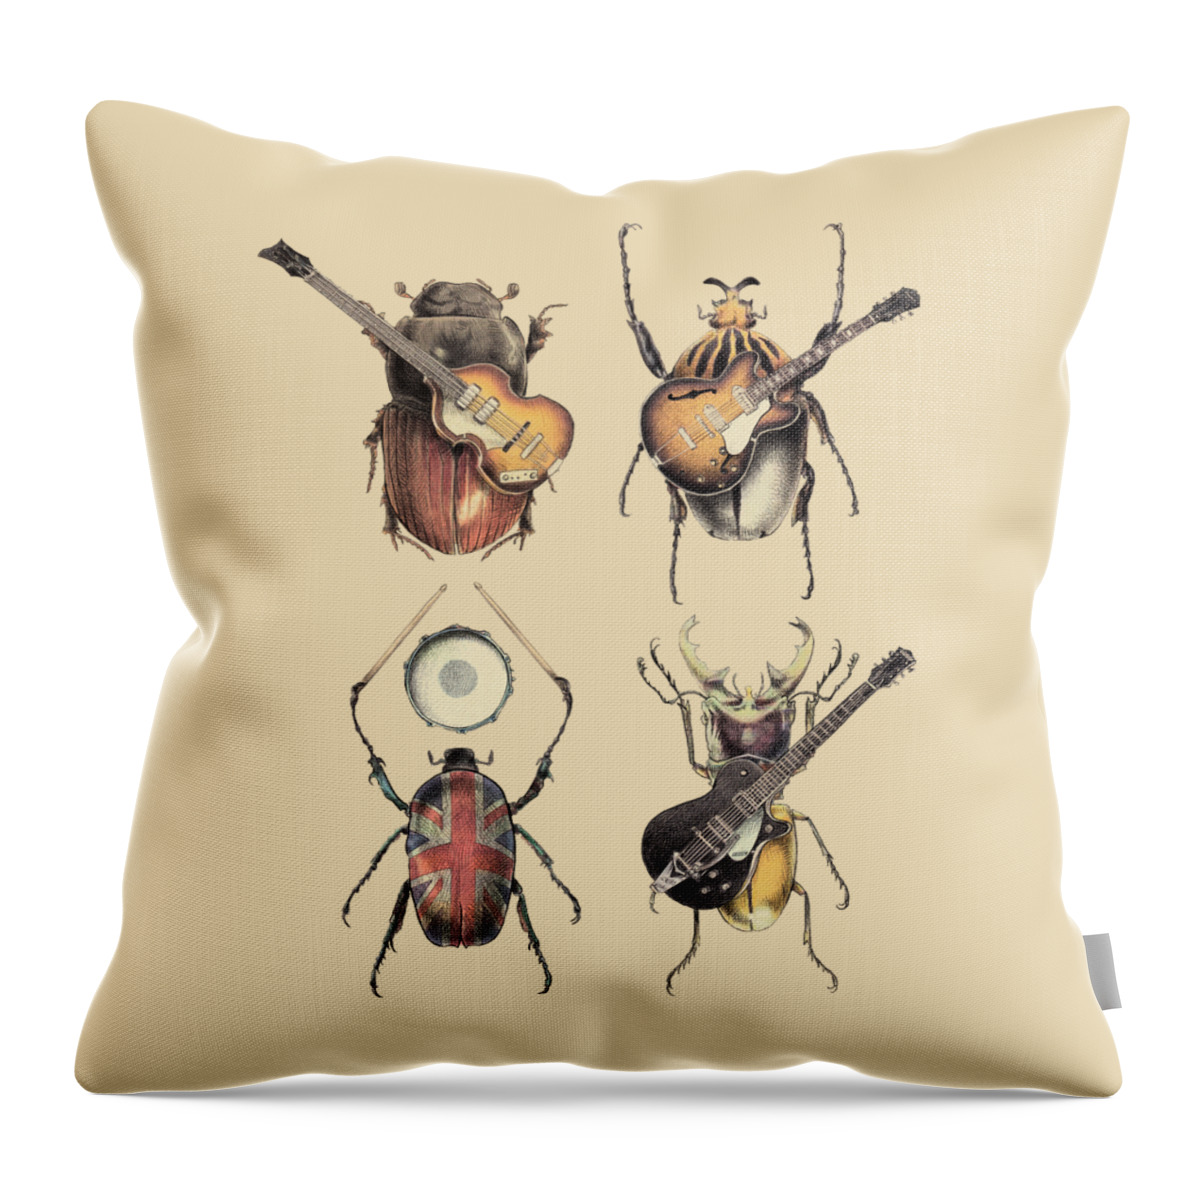 Beetles Throw Pillow featuring the digital art Meet the Beetles by Eric Fan